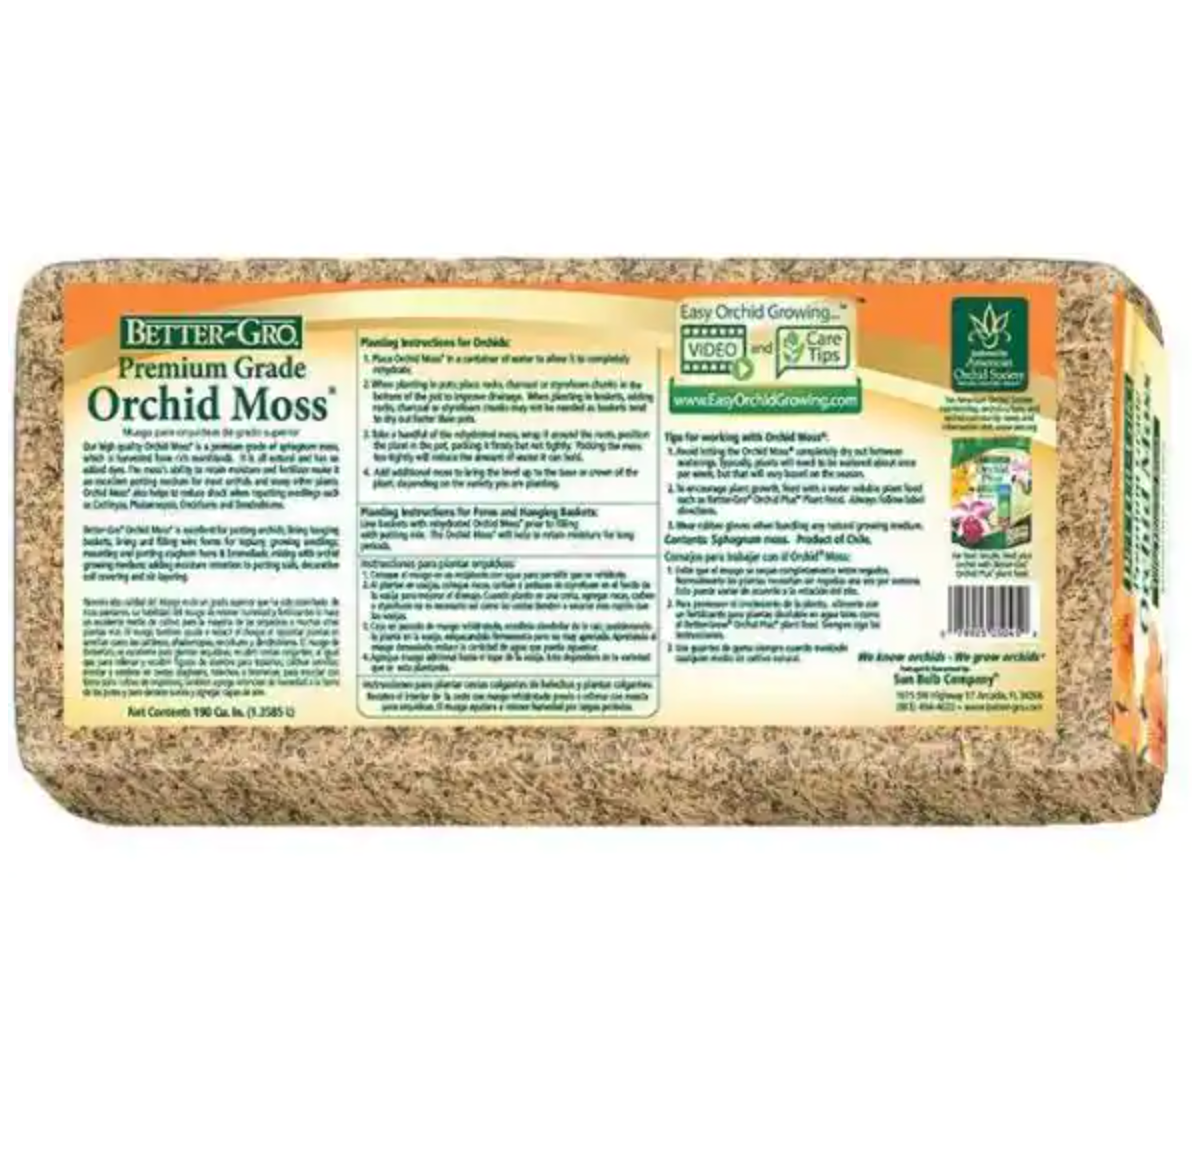 Better-Gro Premium Grade Orchid Moss